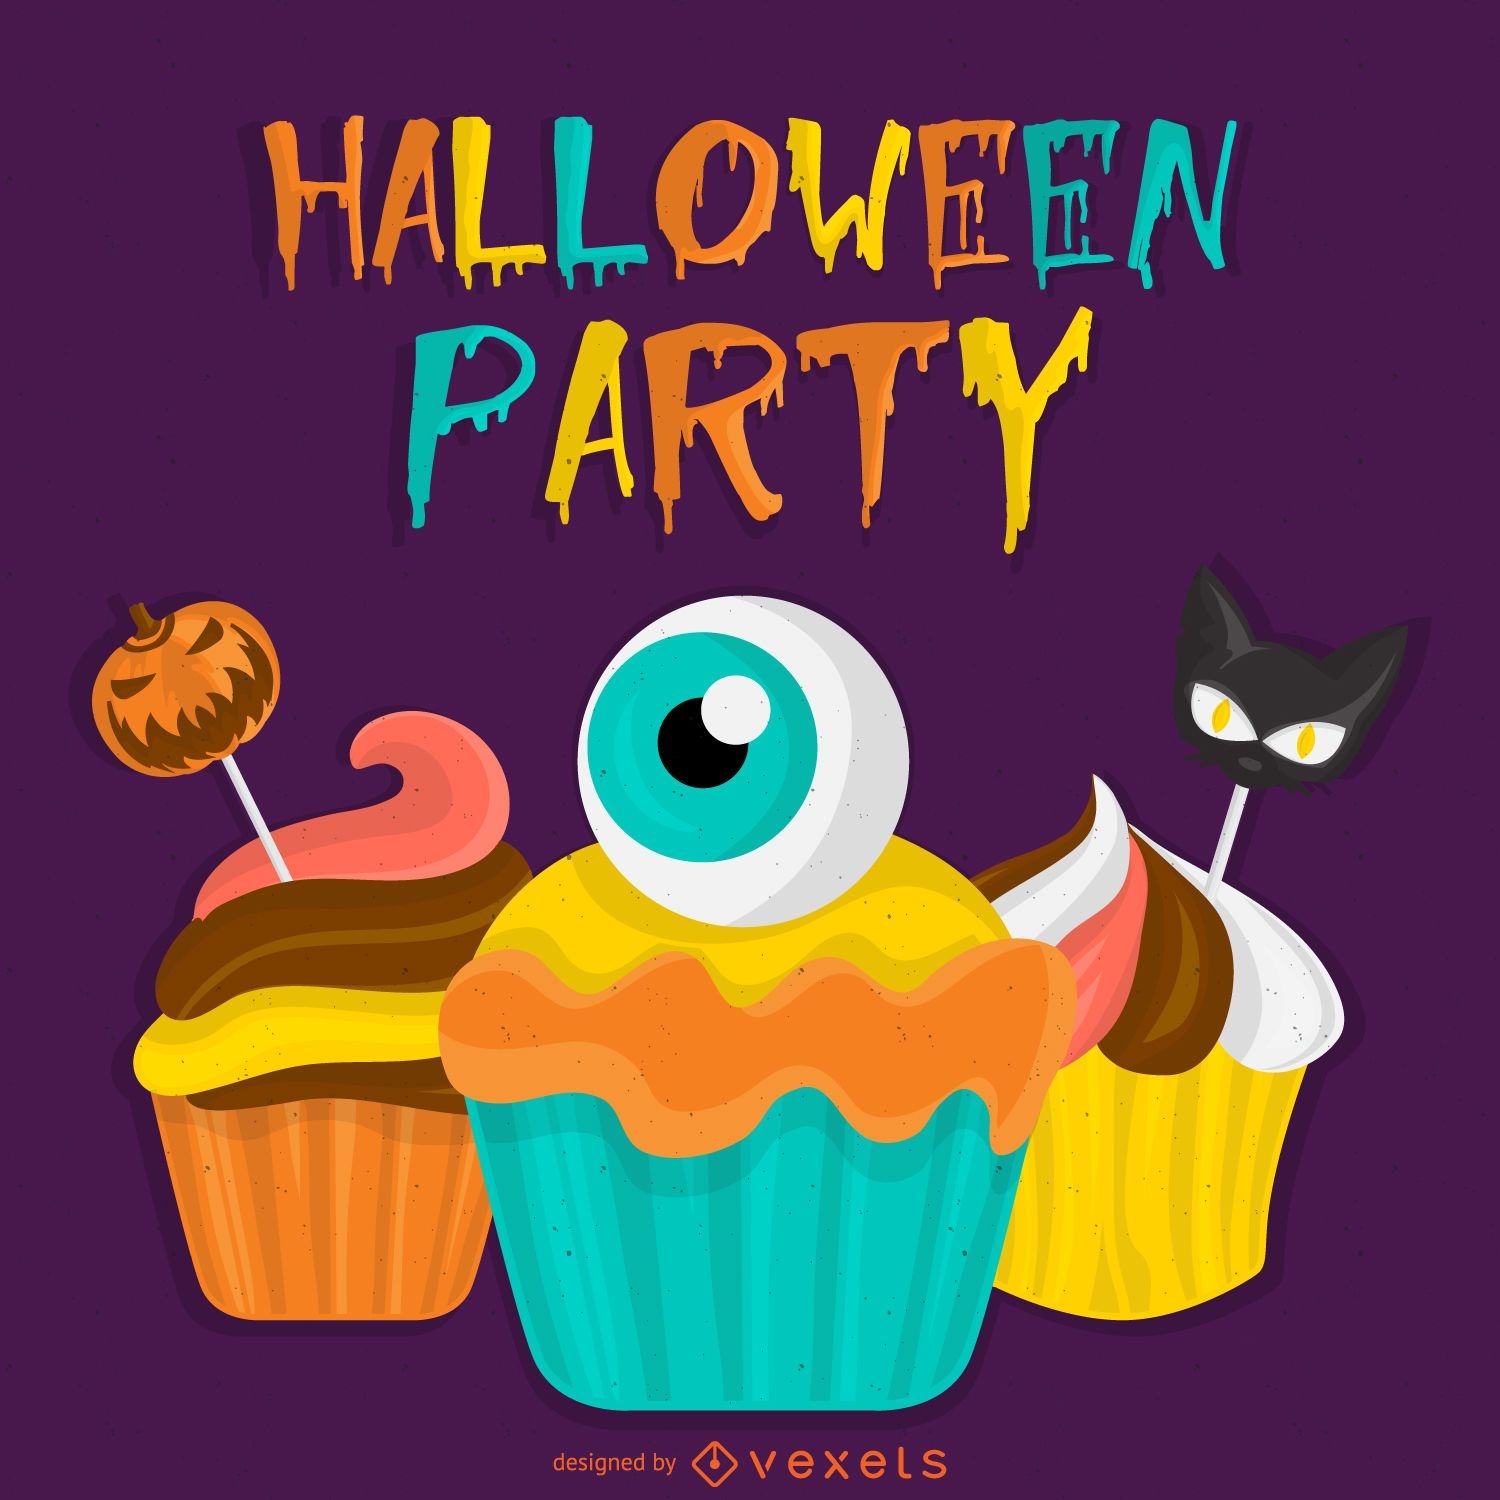 Halloween Party design with Pumpkins